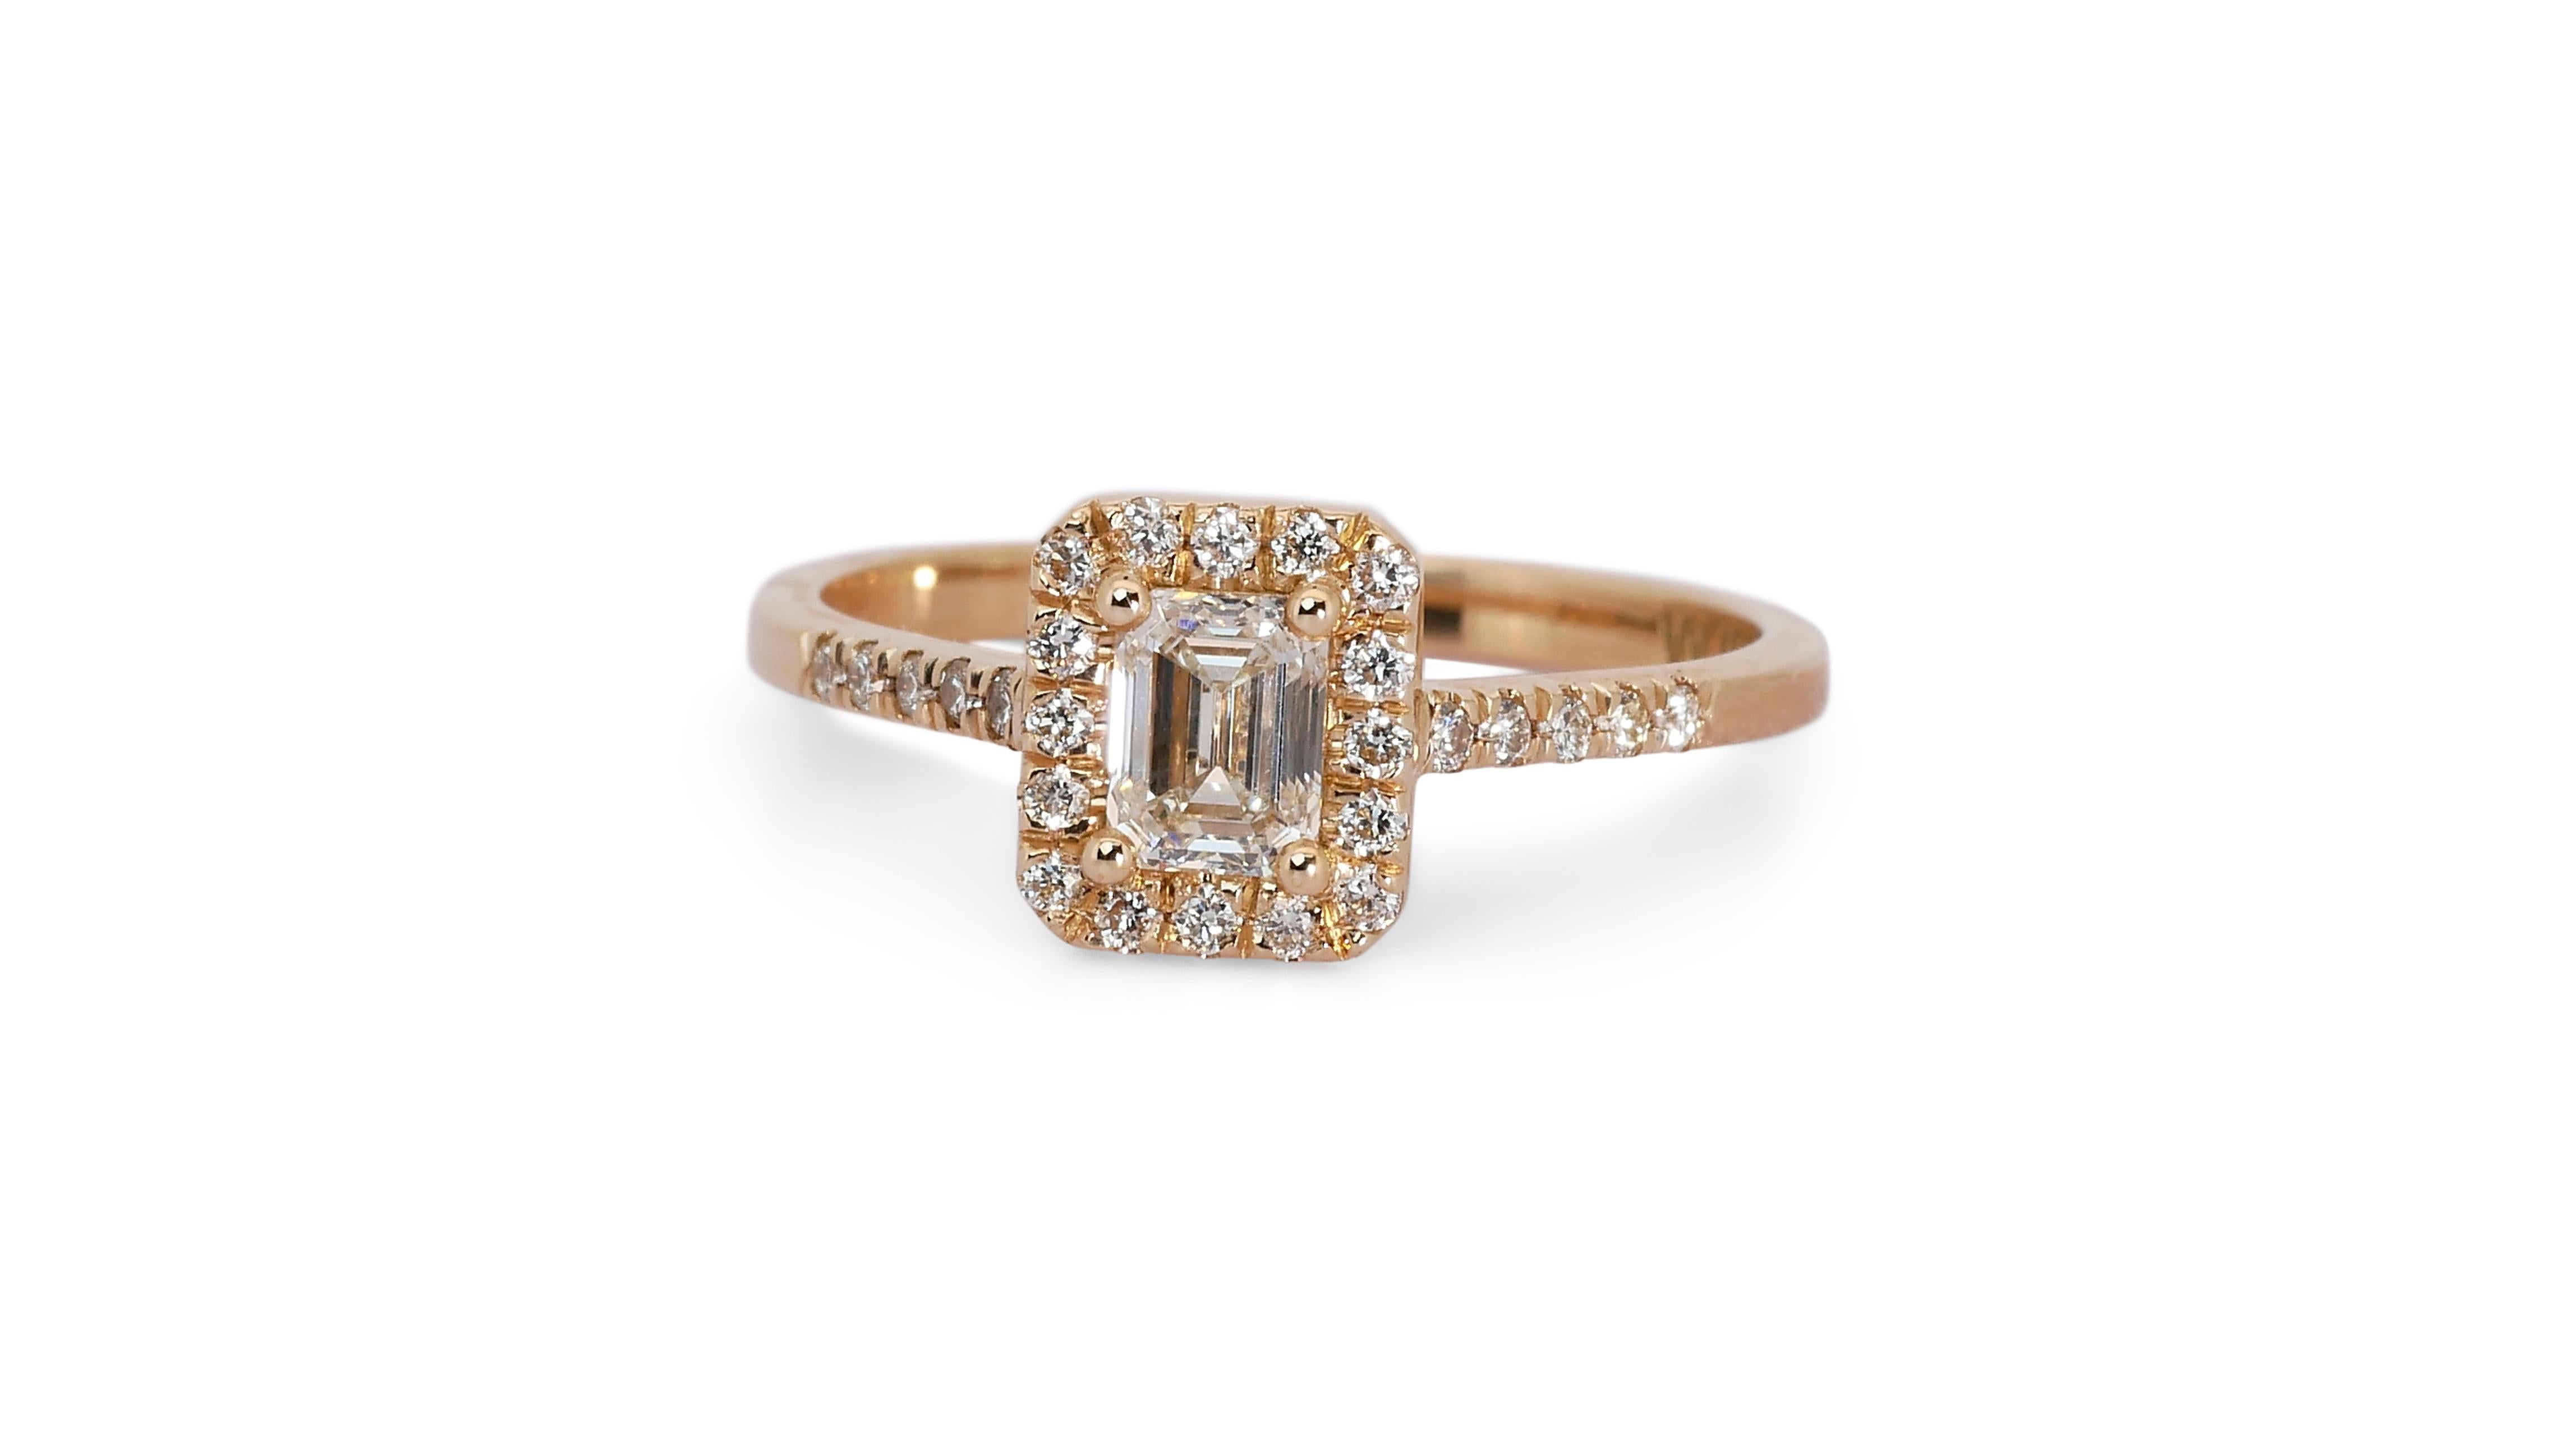 Square Cut Ravishing 18k Rose Gold Halo Ring w/ 0.84 Carat Natural Diamonds IGI Cert For Sale